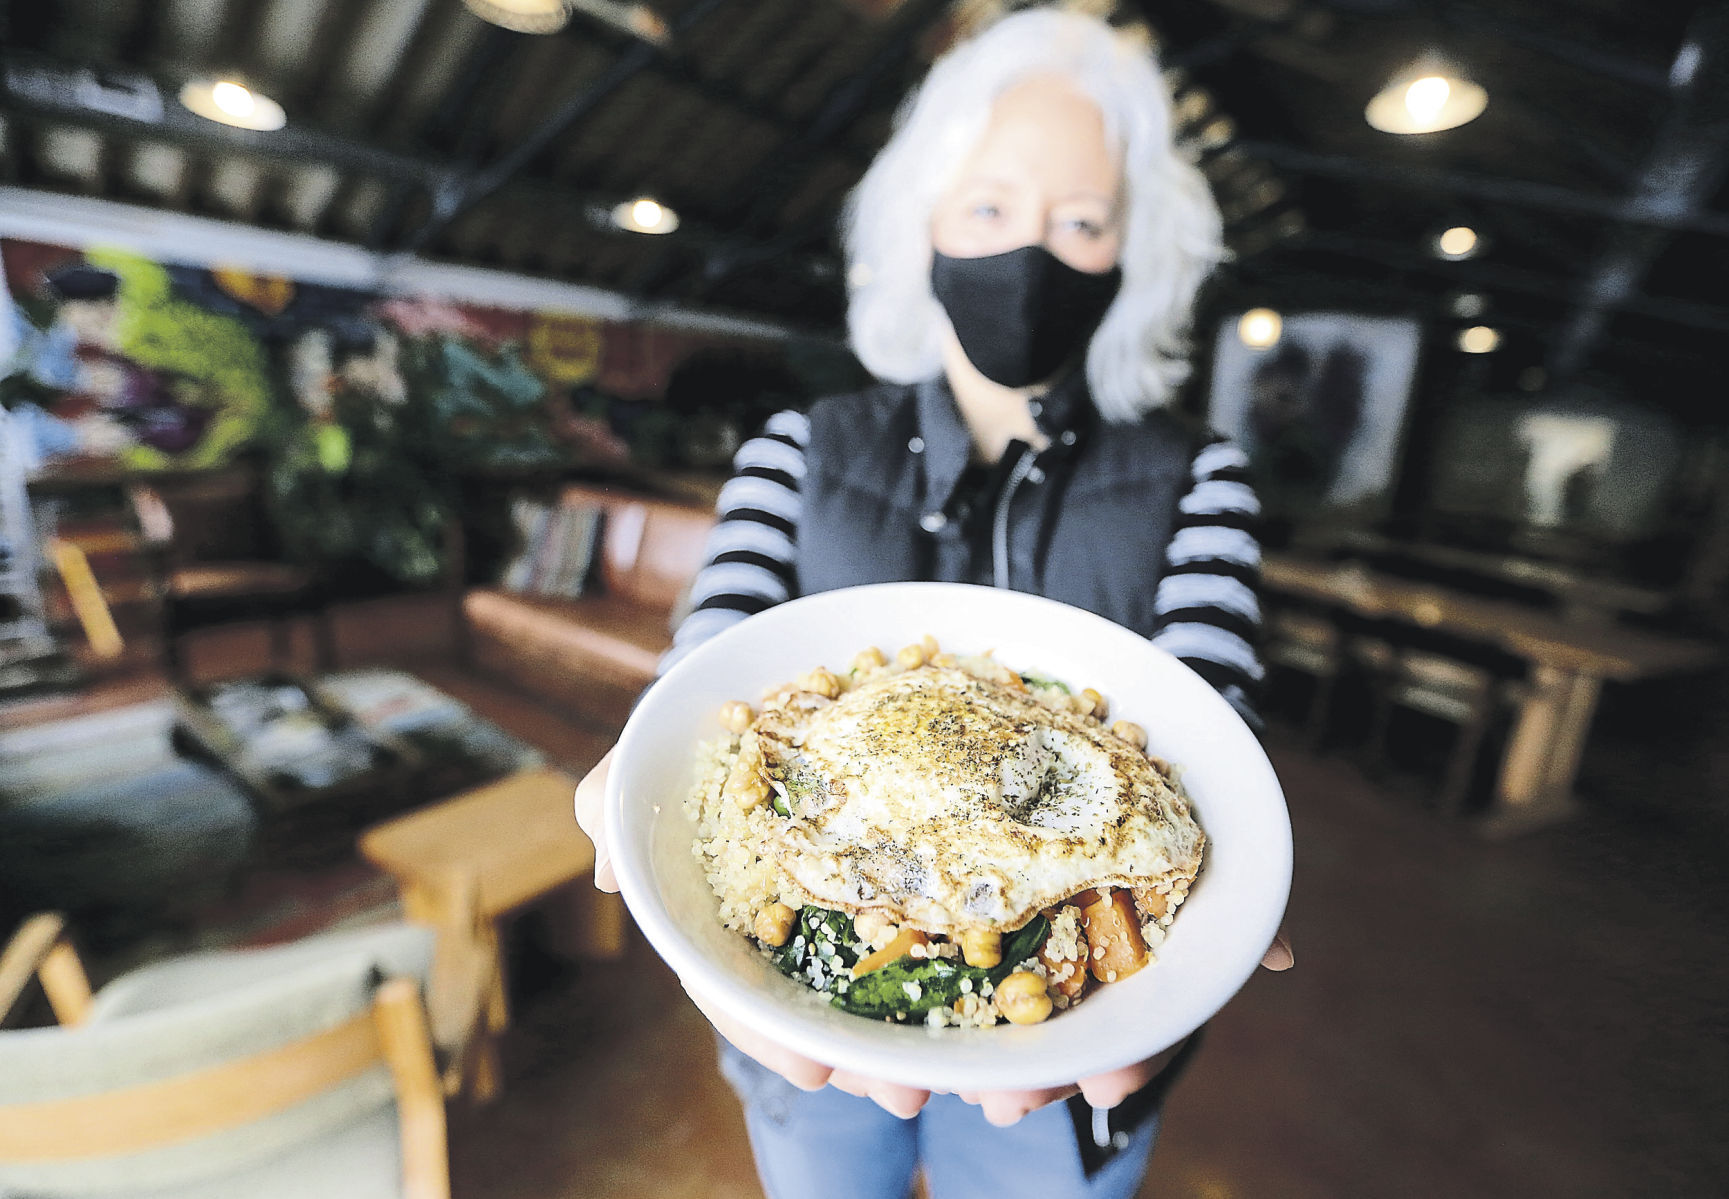 Leslie Shalabi, co-founder of Convivium, displays a sweet potato quinoa bowl. PHOTO CREDIT: JESSICA REILLY